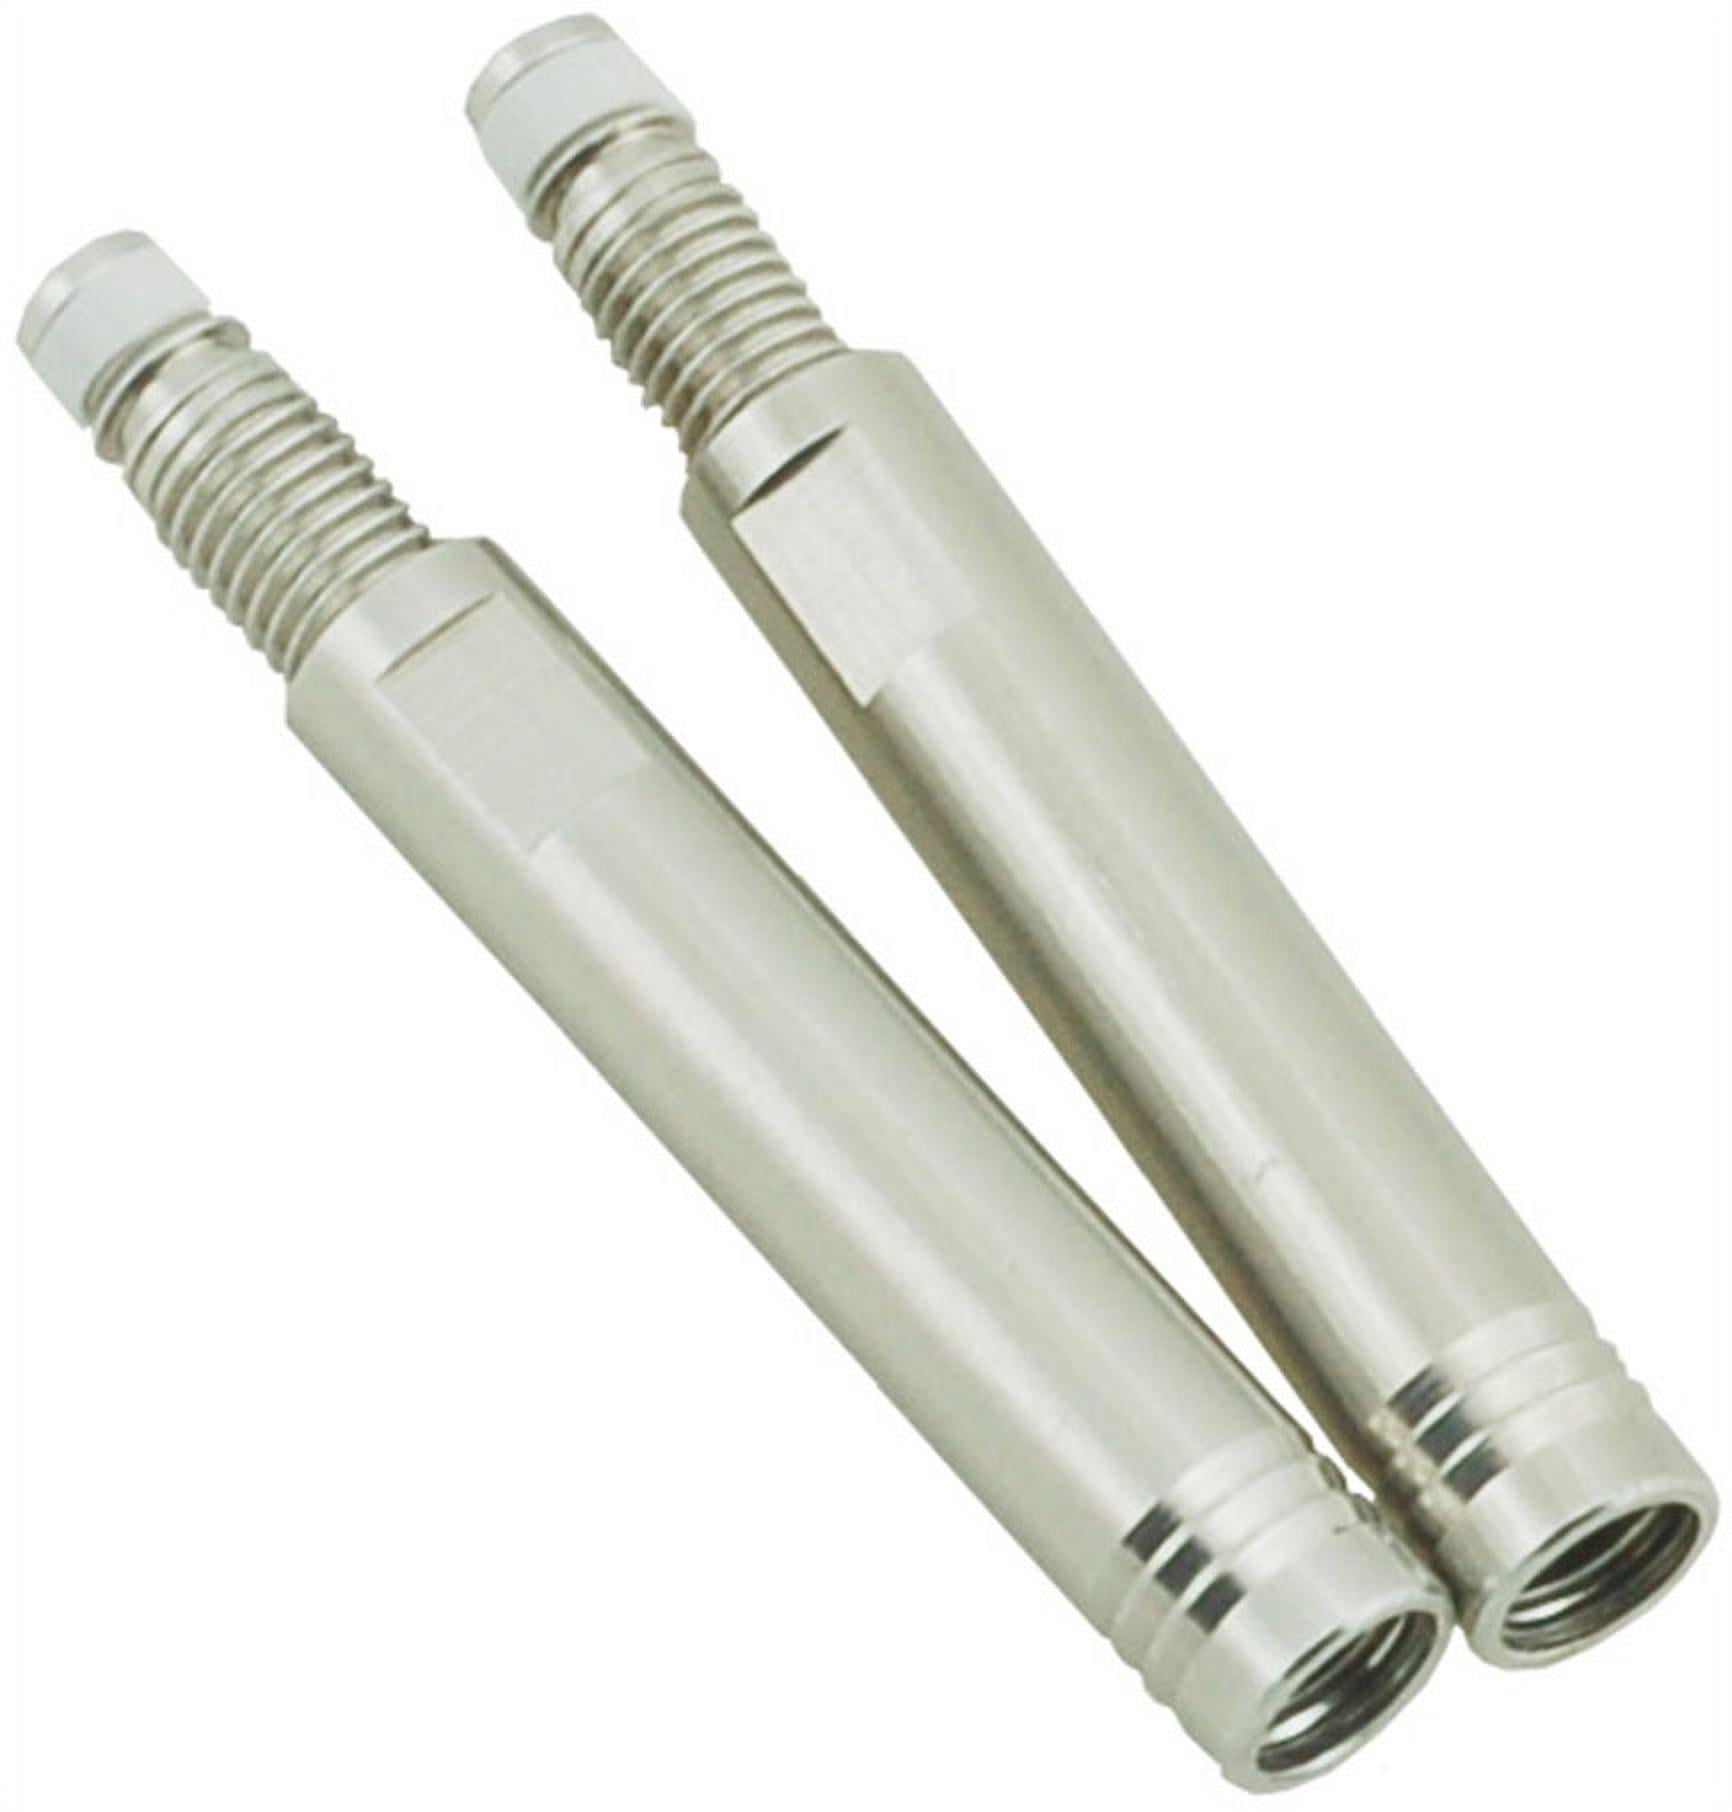 Tufo 30mm presta valve extenders & valve core tool 2 extenders per order